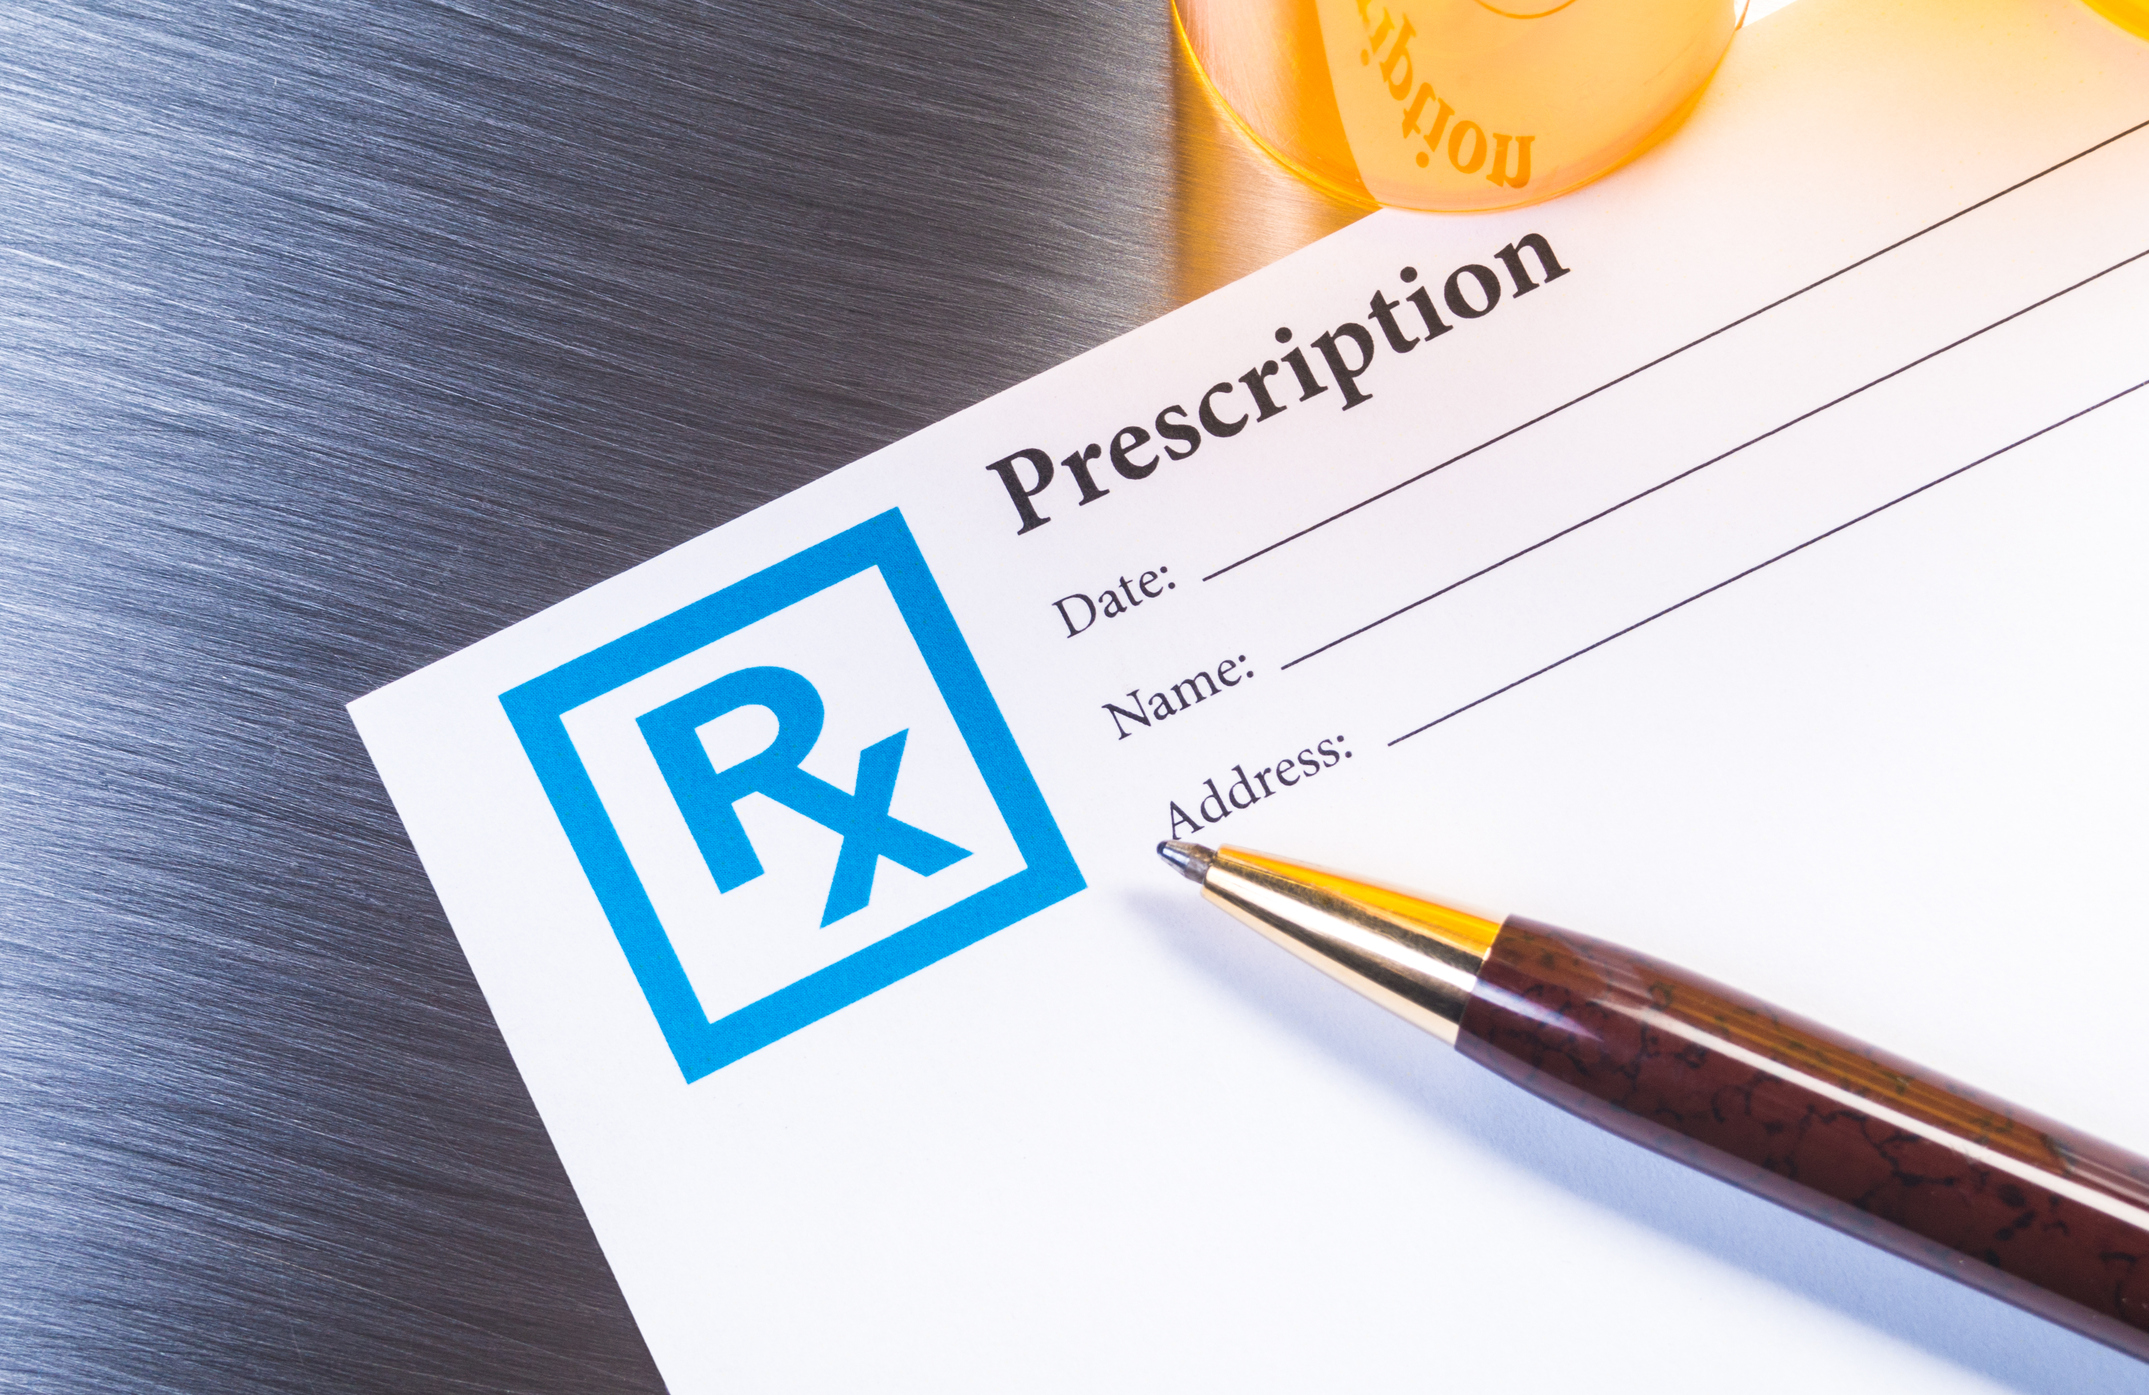 Prescription Medications in Canadian Pharmacy